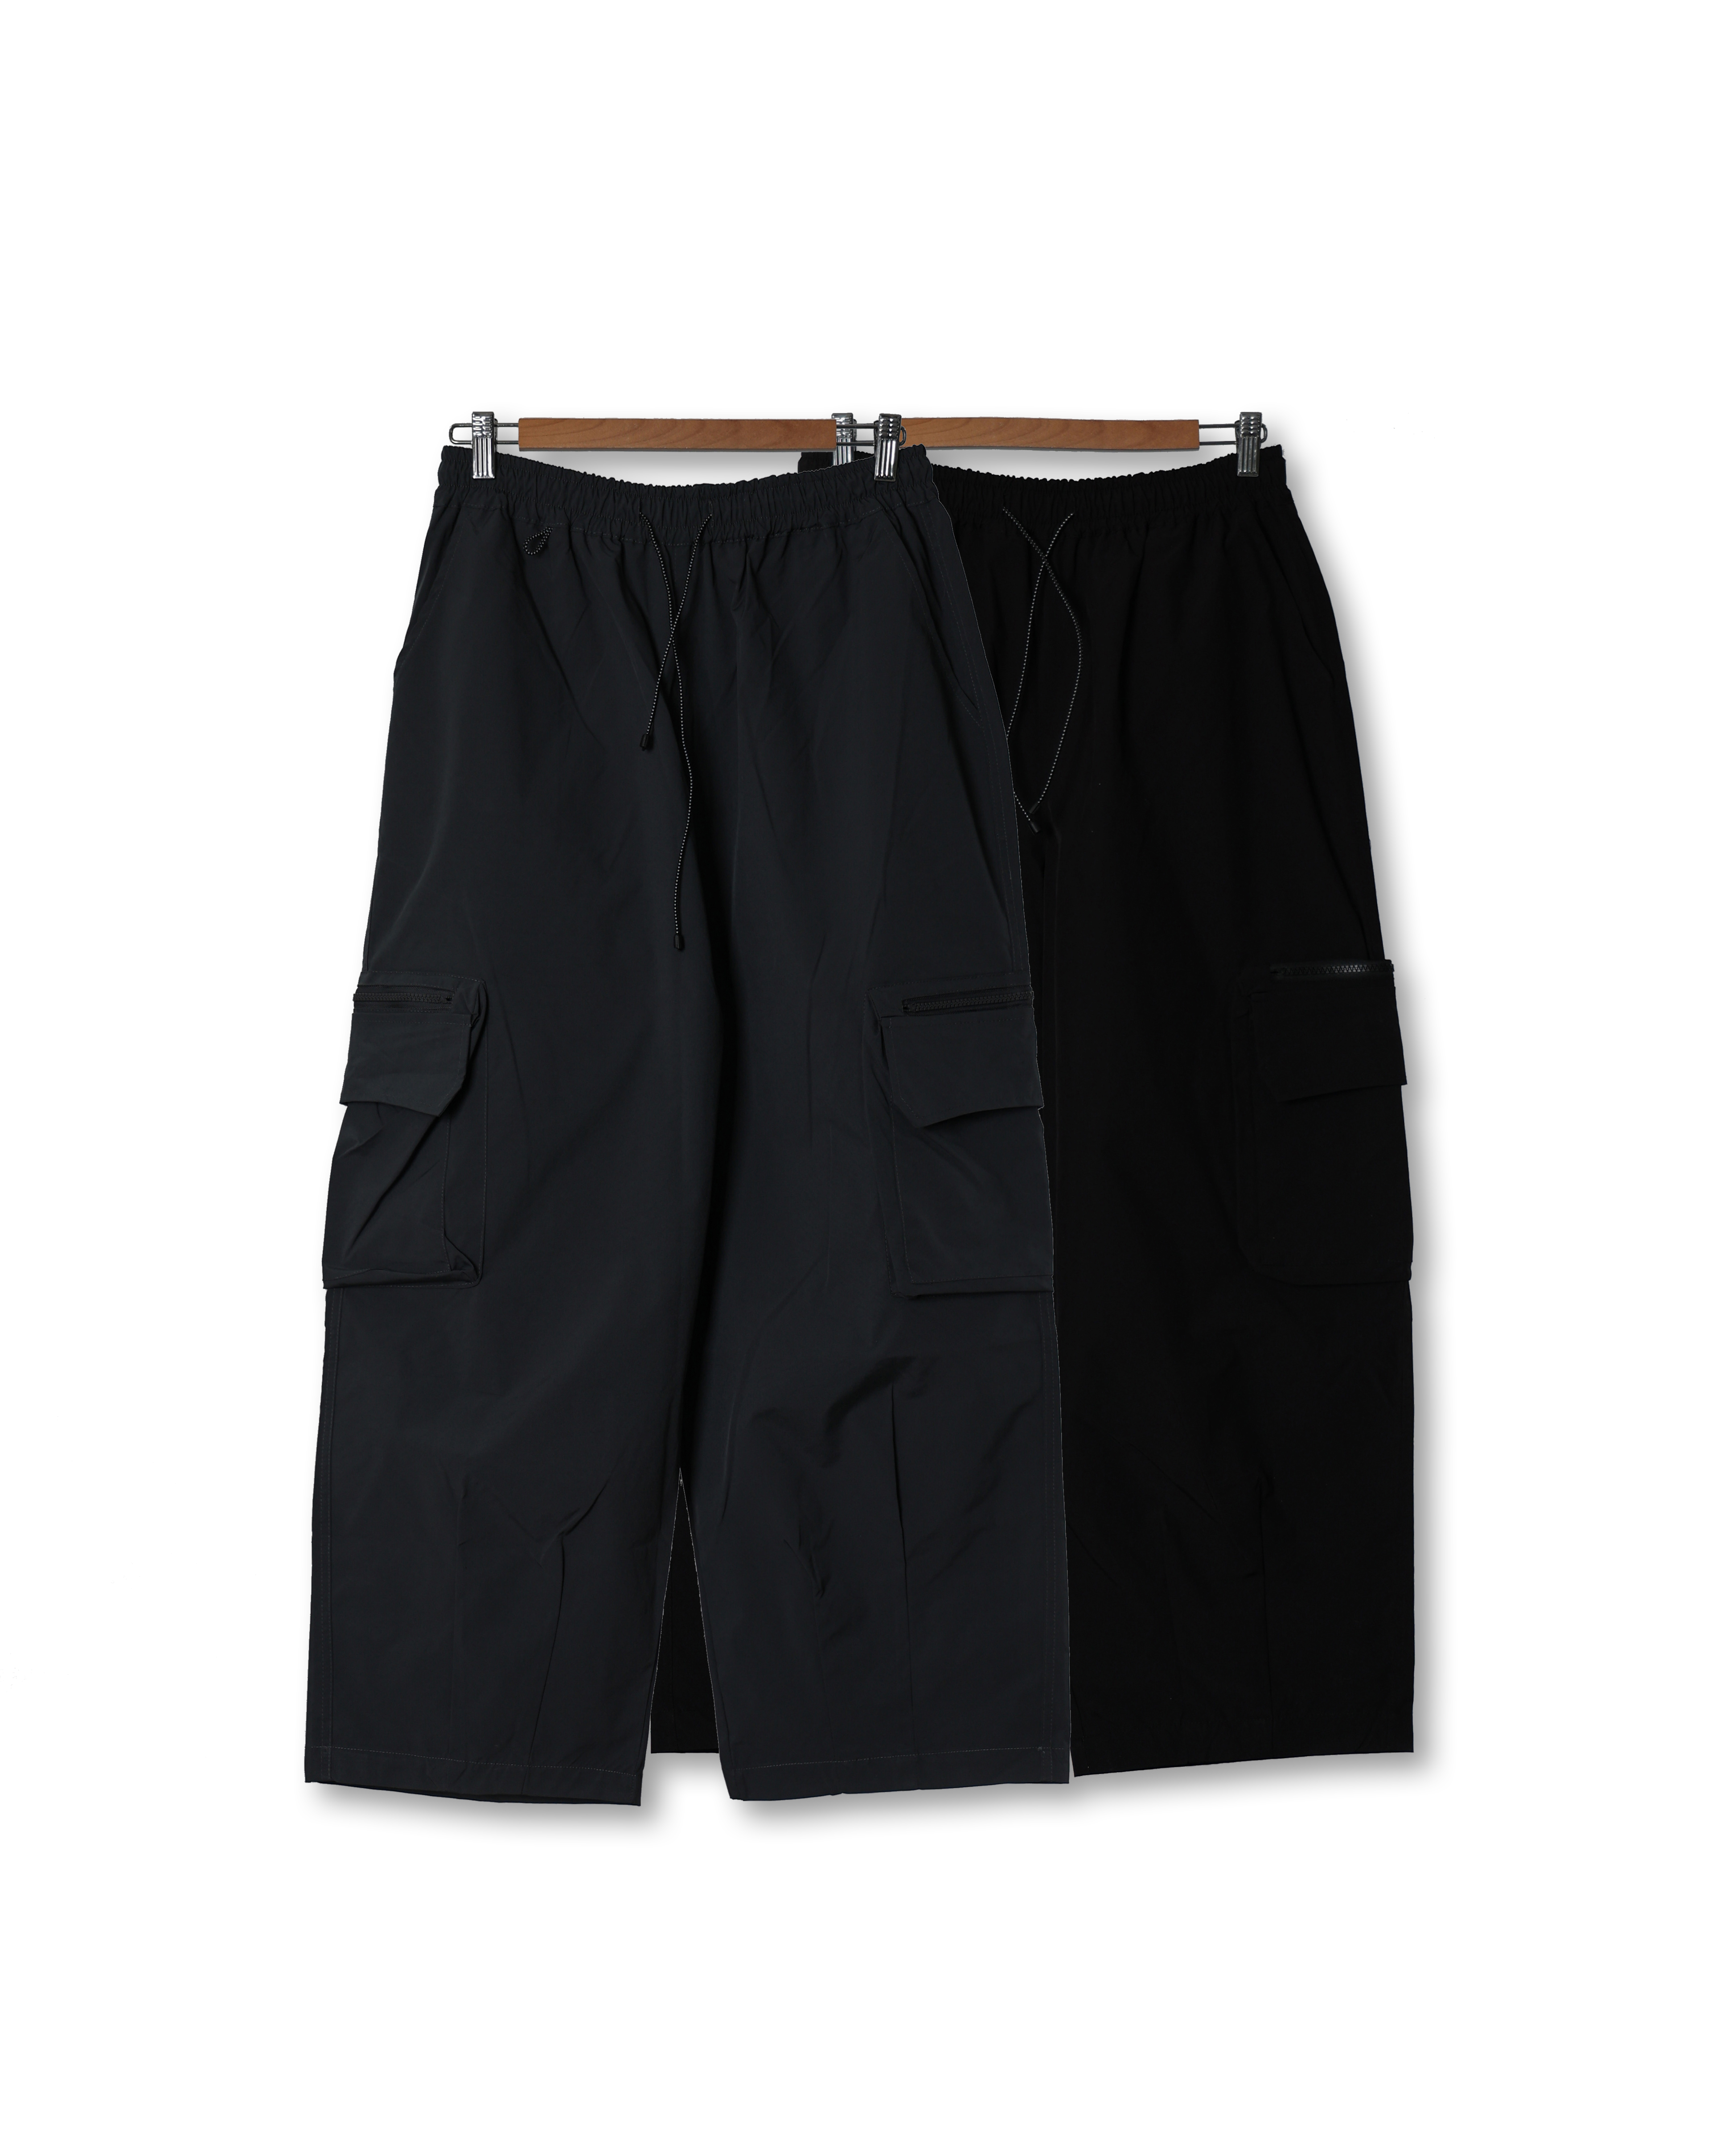 HOMAG Nylon Wide Zip Cargo Pants (Black/Charcoal)